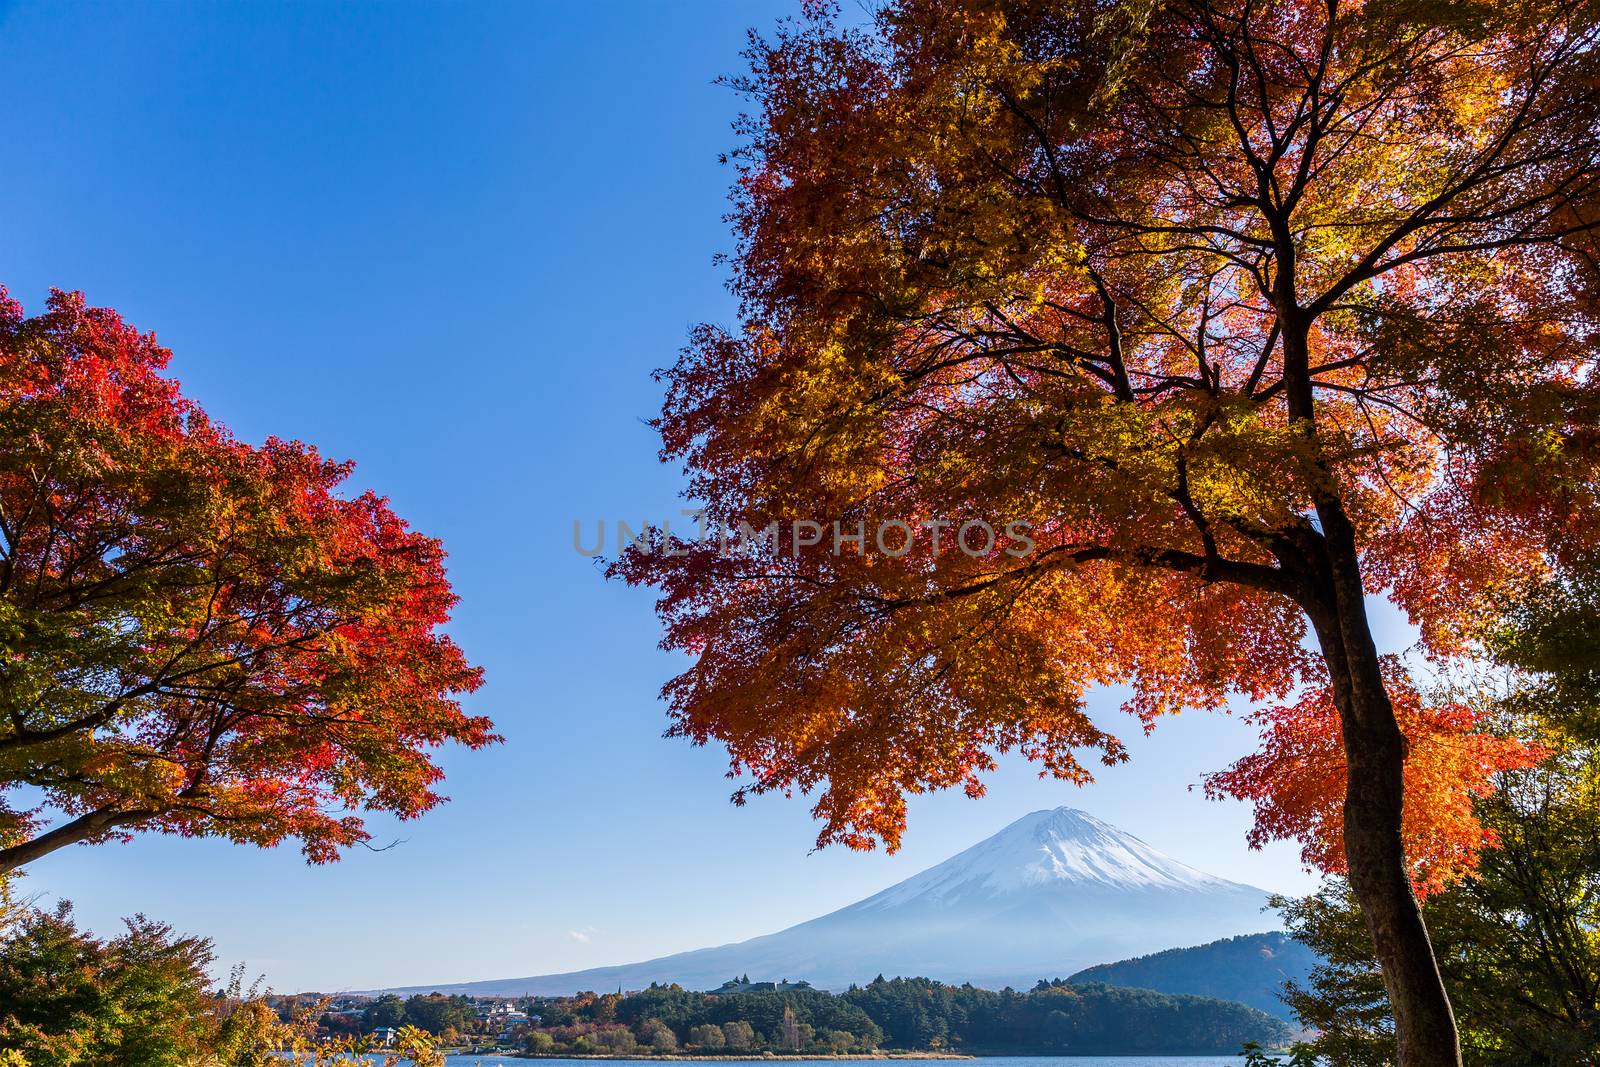 Maple tree and Mt. Fuji